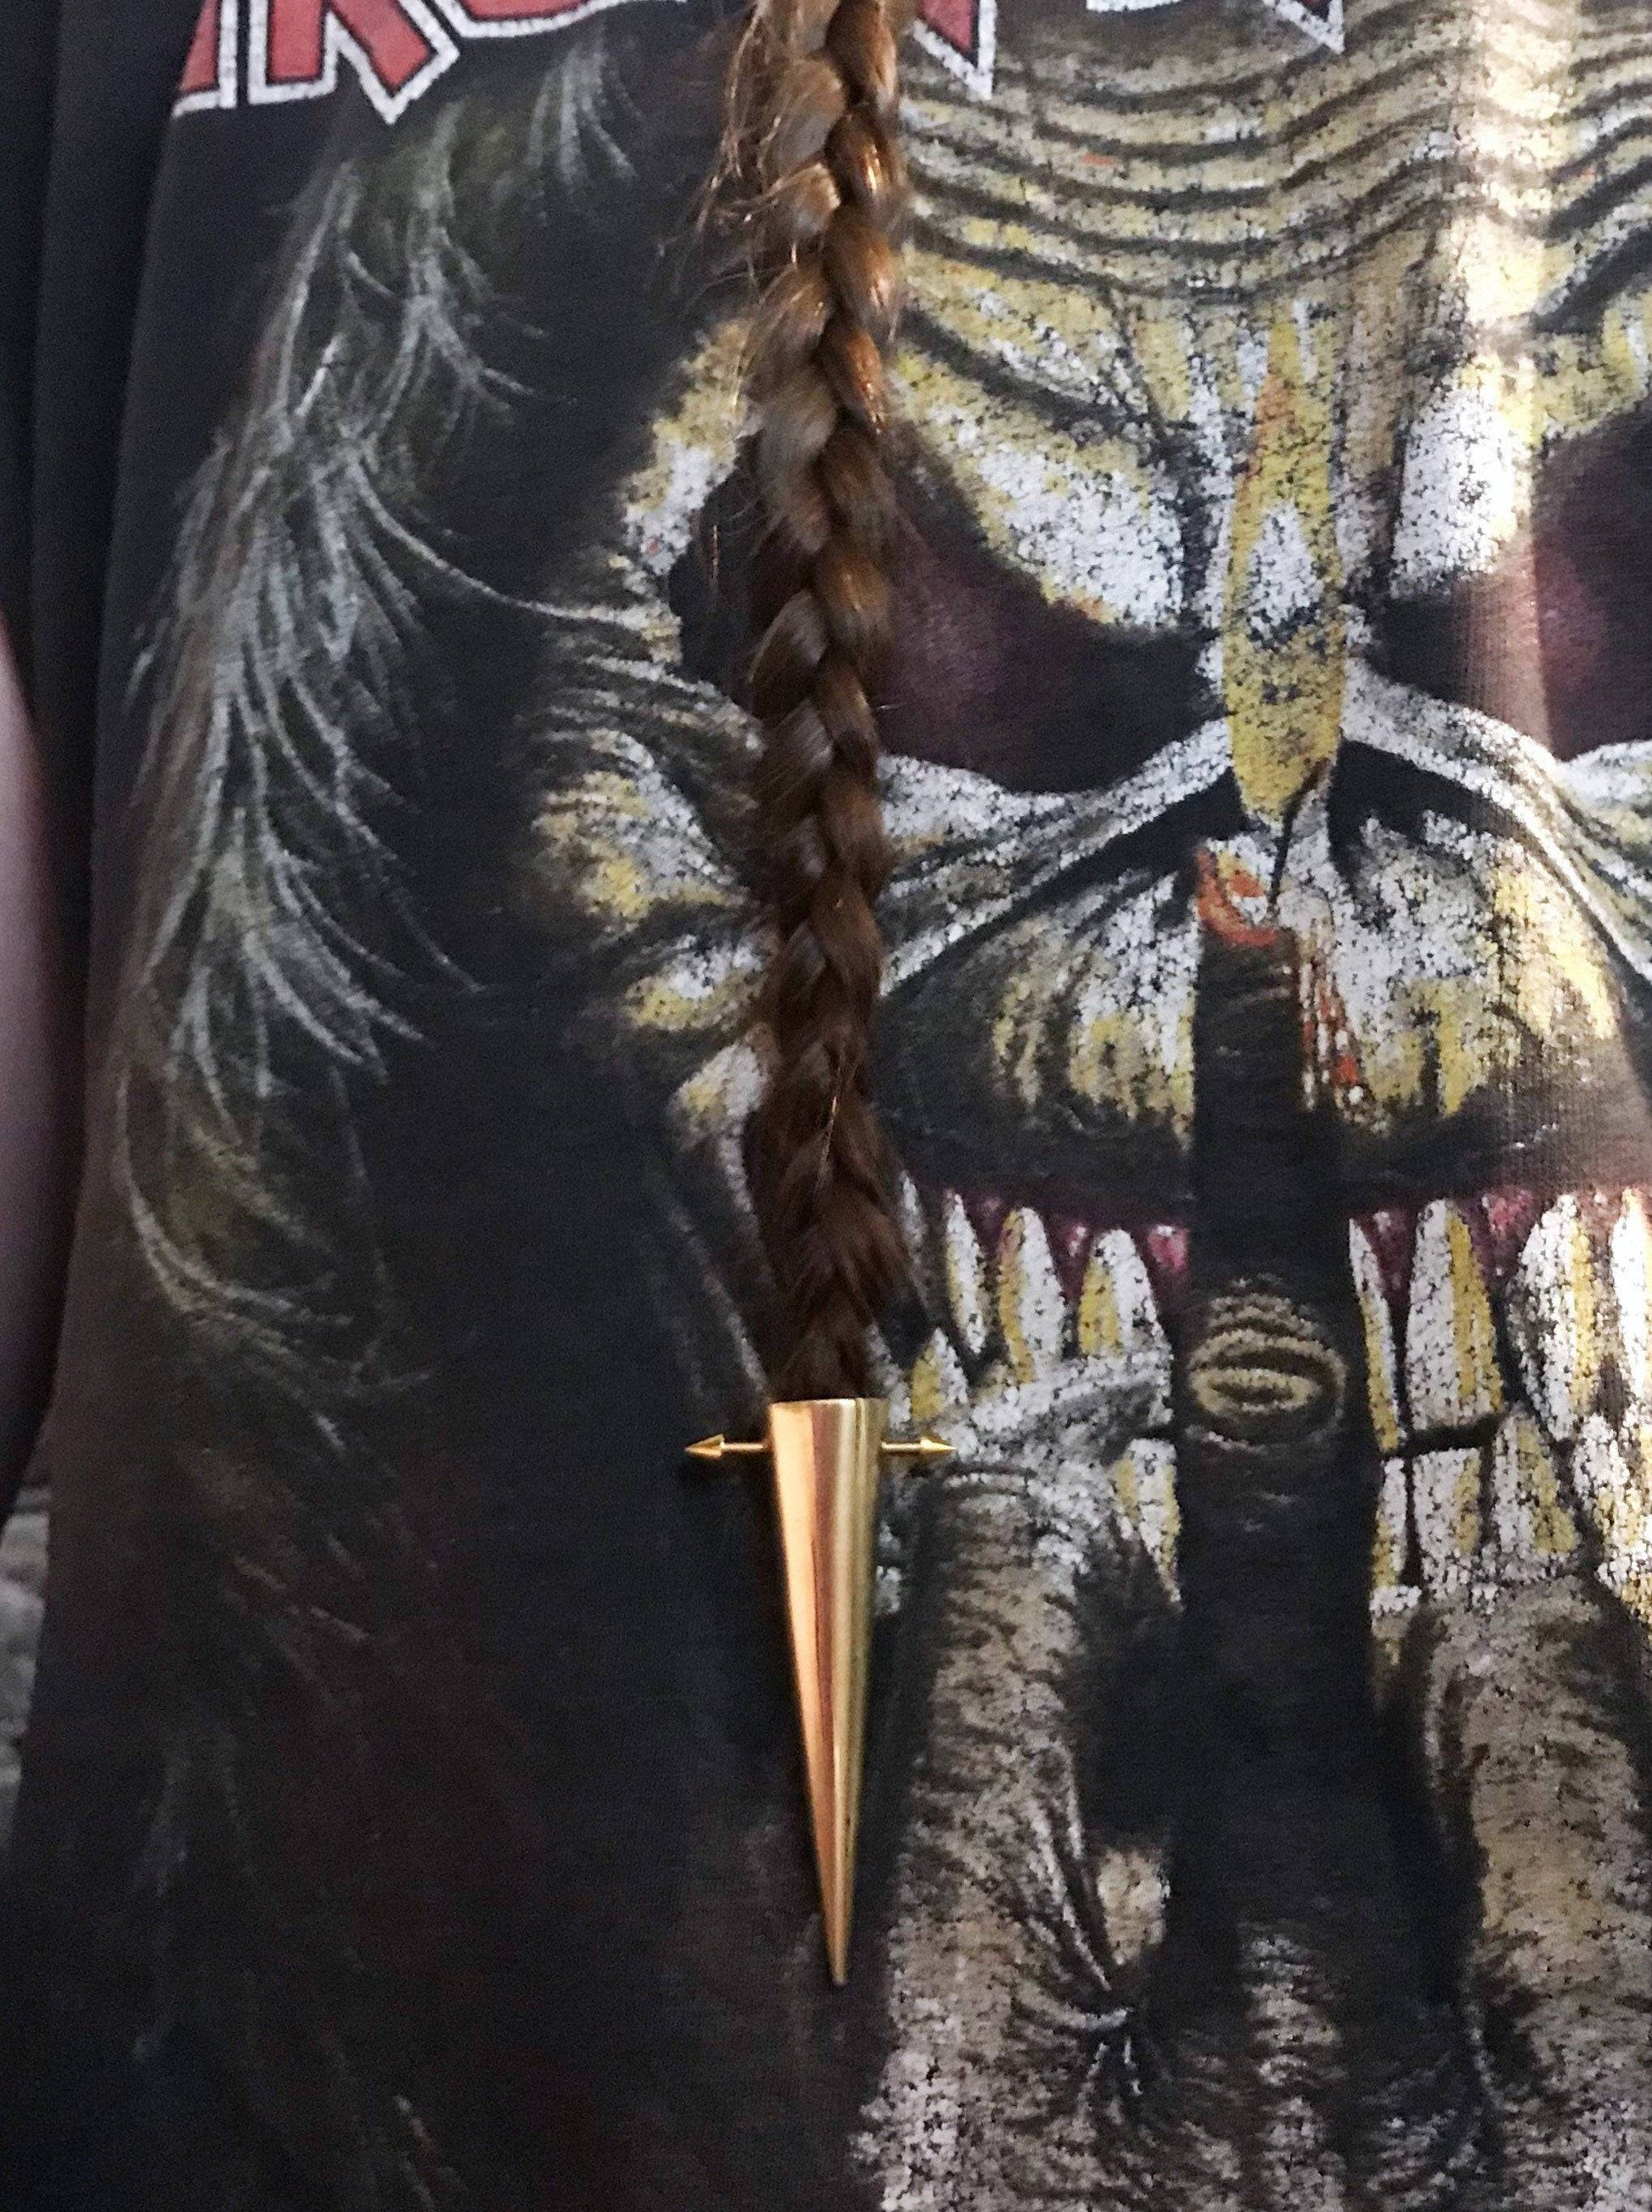 STAINLESS STEEL Unicorn Hair Spike Goth, Viking Hair Jewelry for Braids or  Dreadlocks. Braid Jewelry, Braid Accessories, Viking Hair Beads 